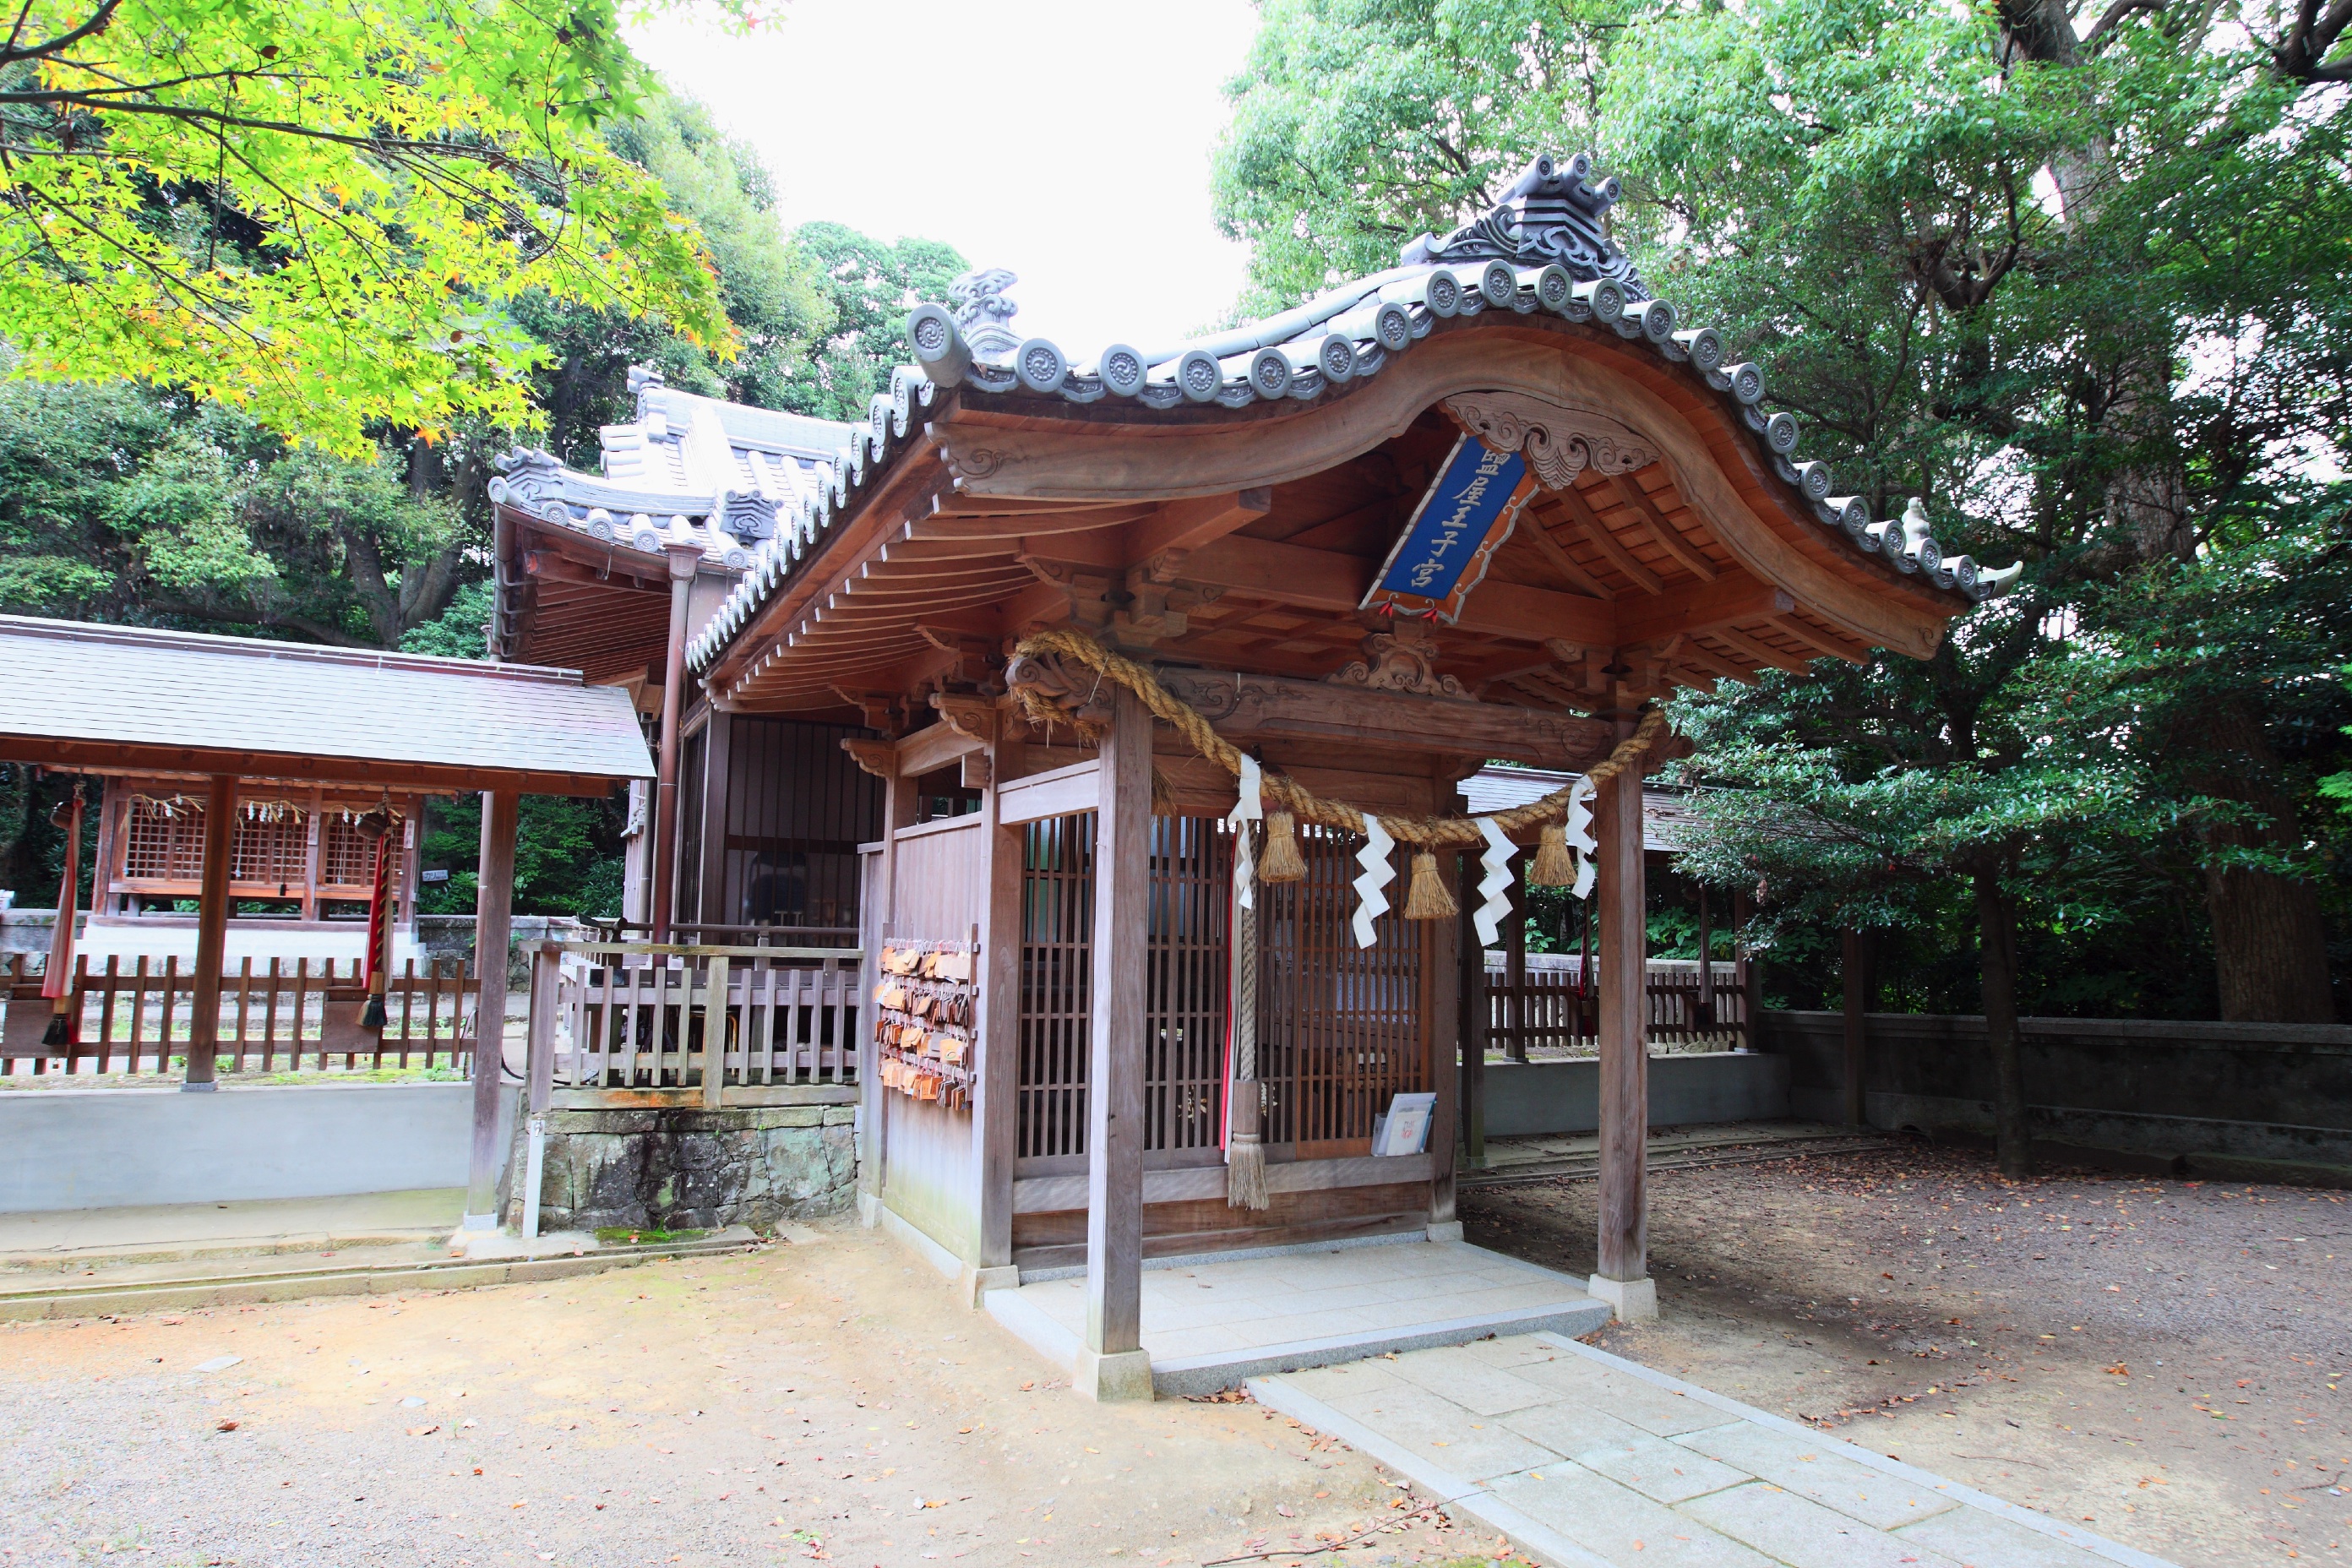 Hidakaminato Shioya Green Space (Sio Top) A Shrine Visited by Many for Safe Childbirth Prayers!